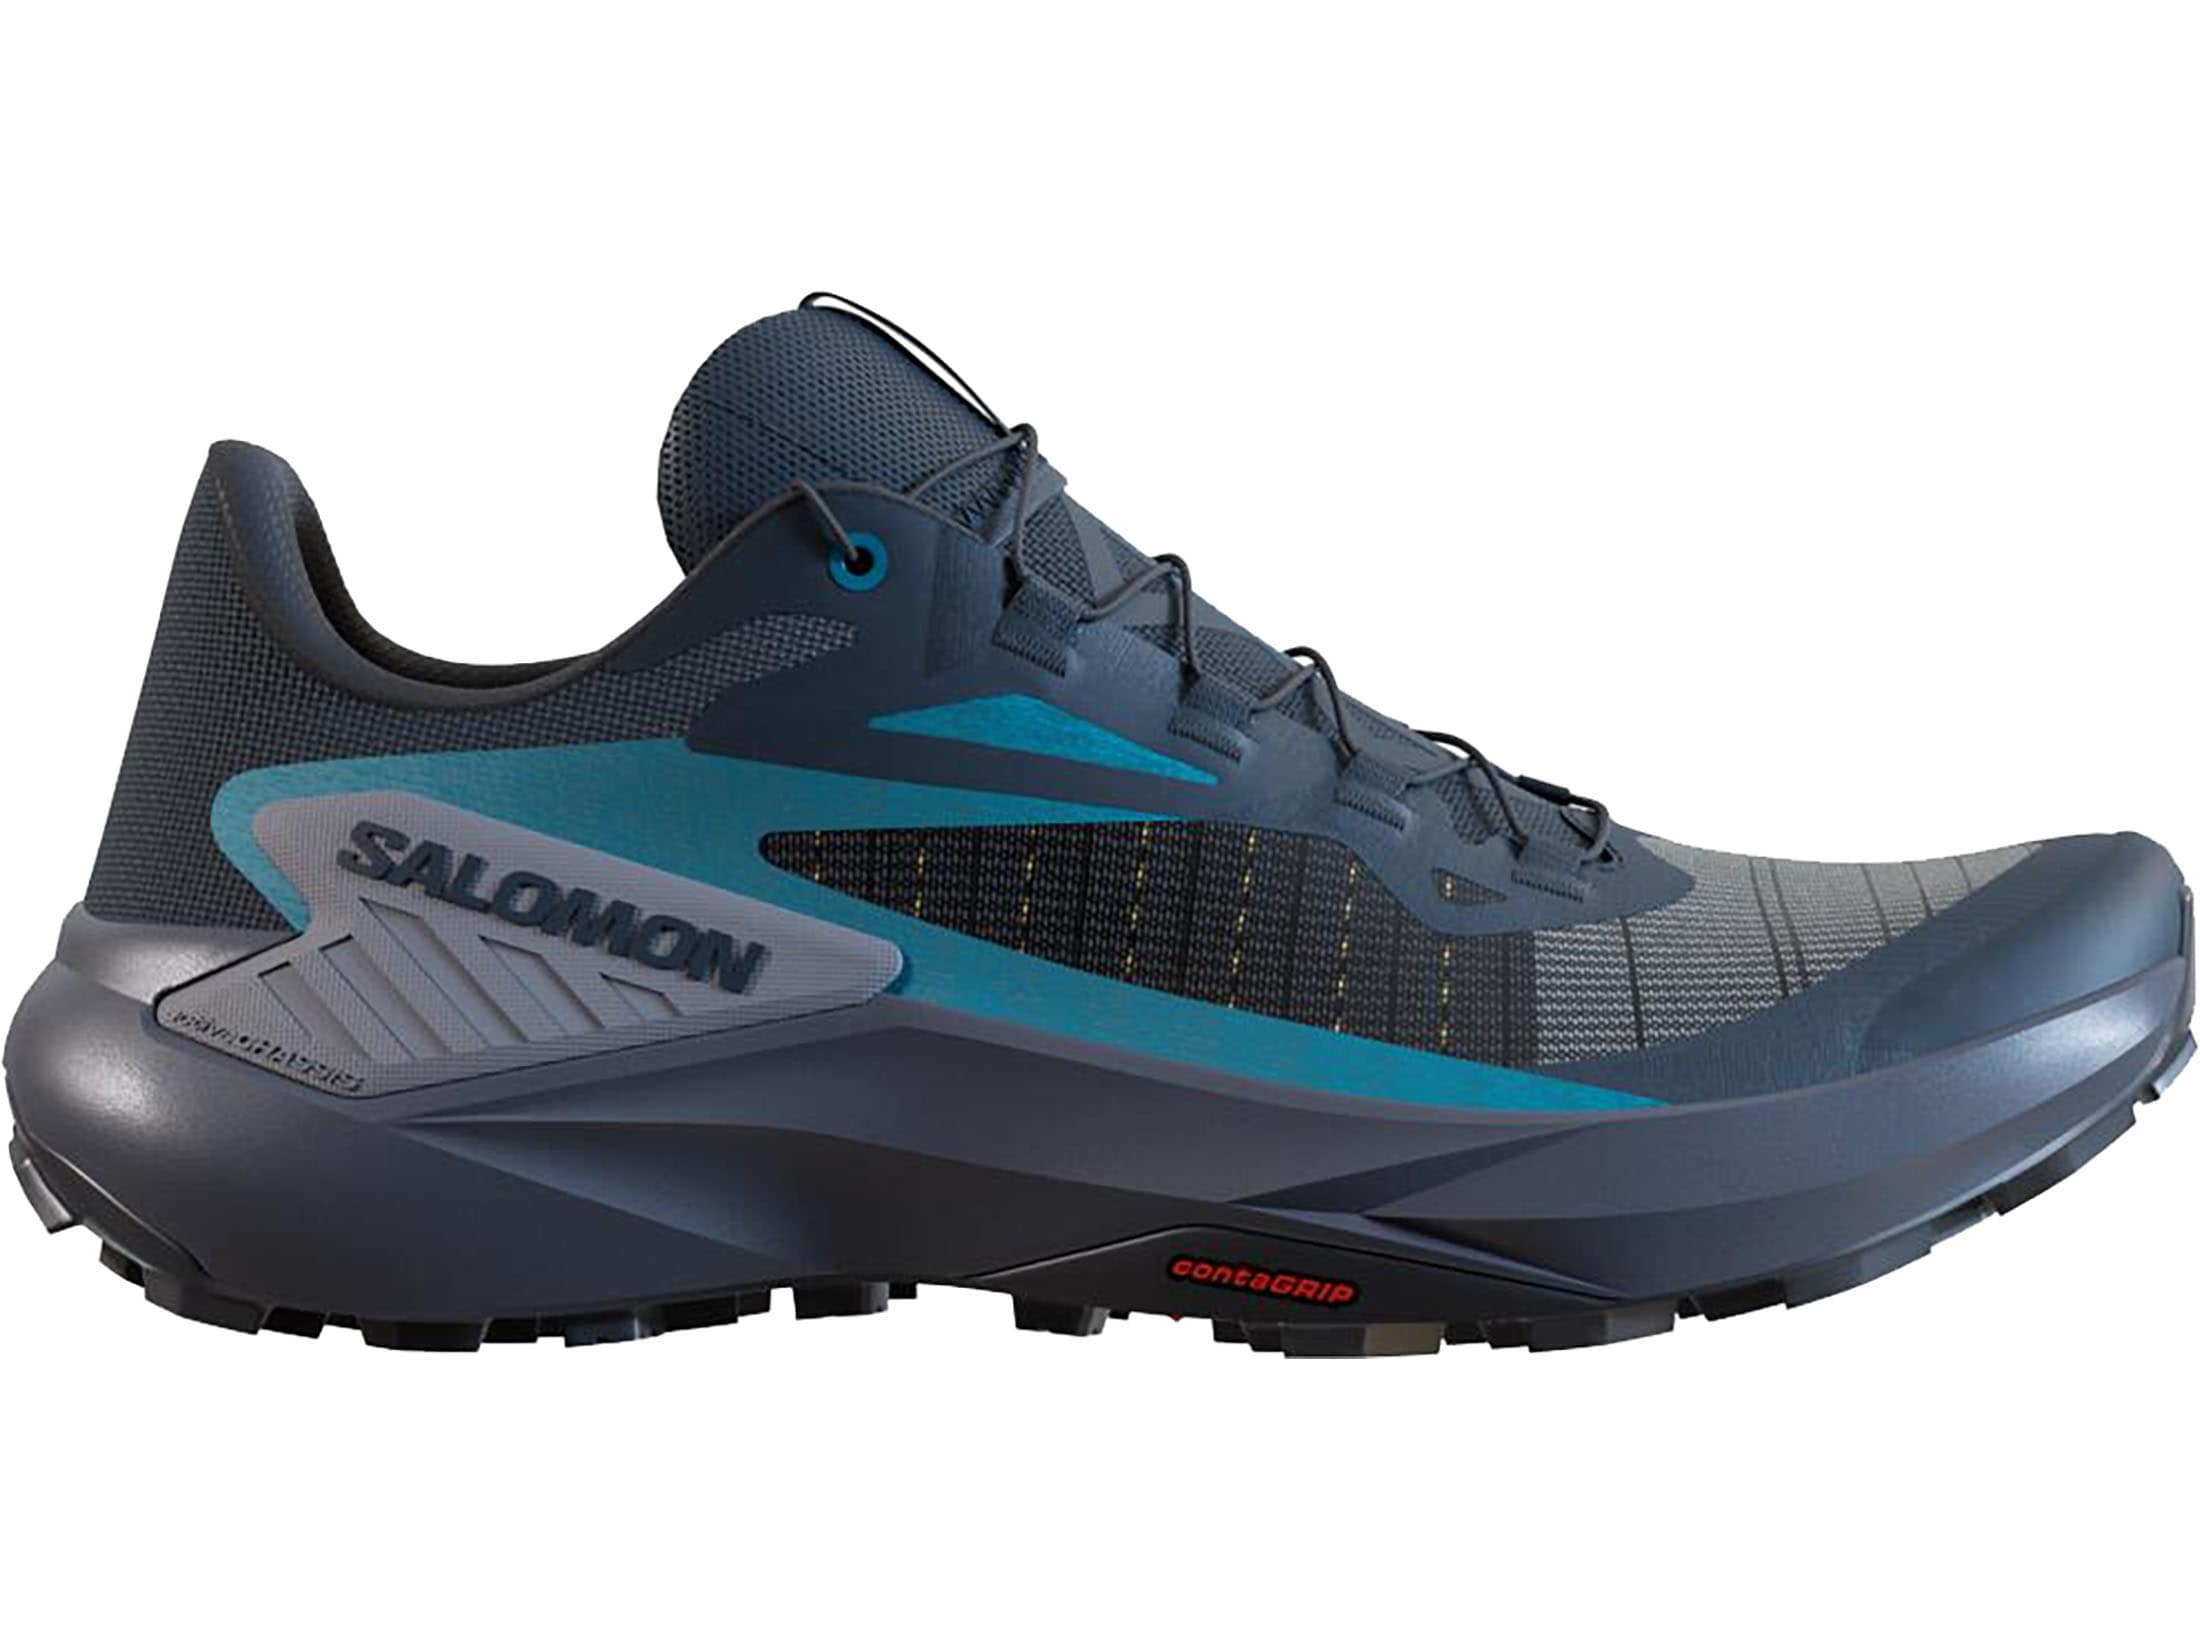 Salomon Genesis Hiking Shoes Synthetic Black/Sulphur